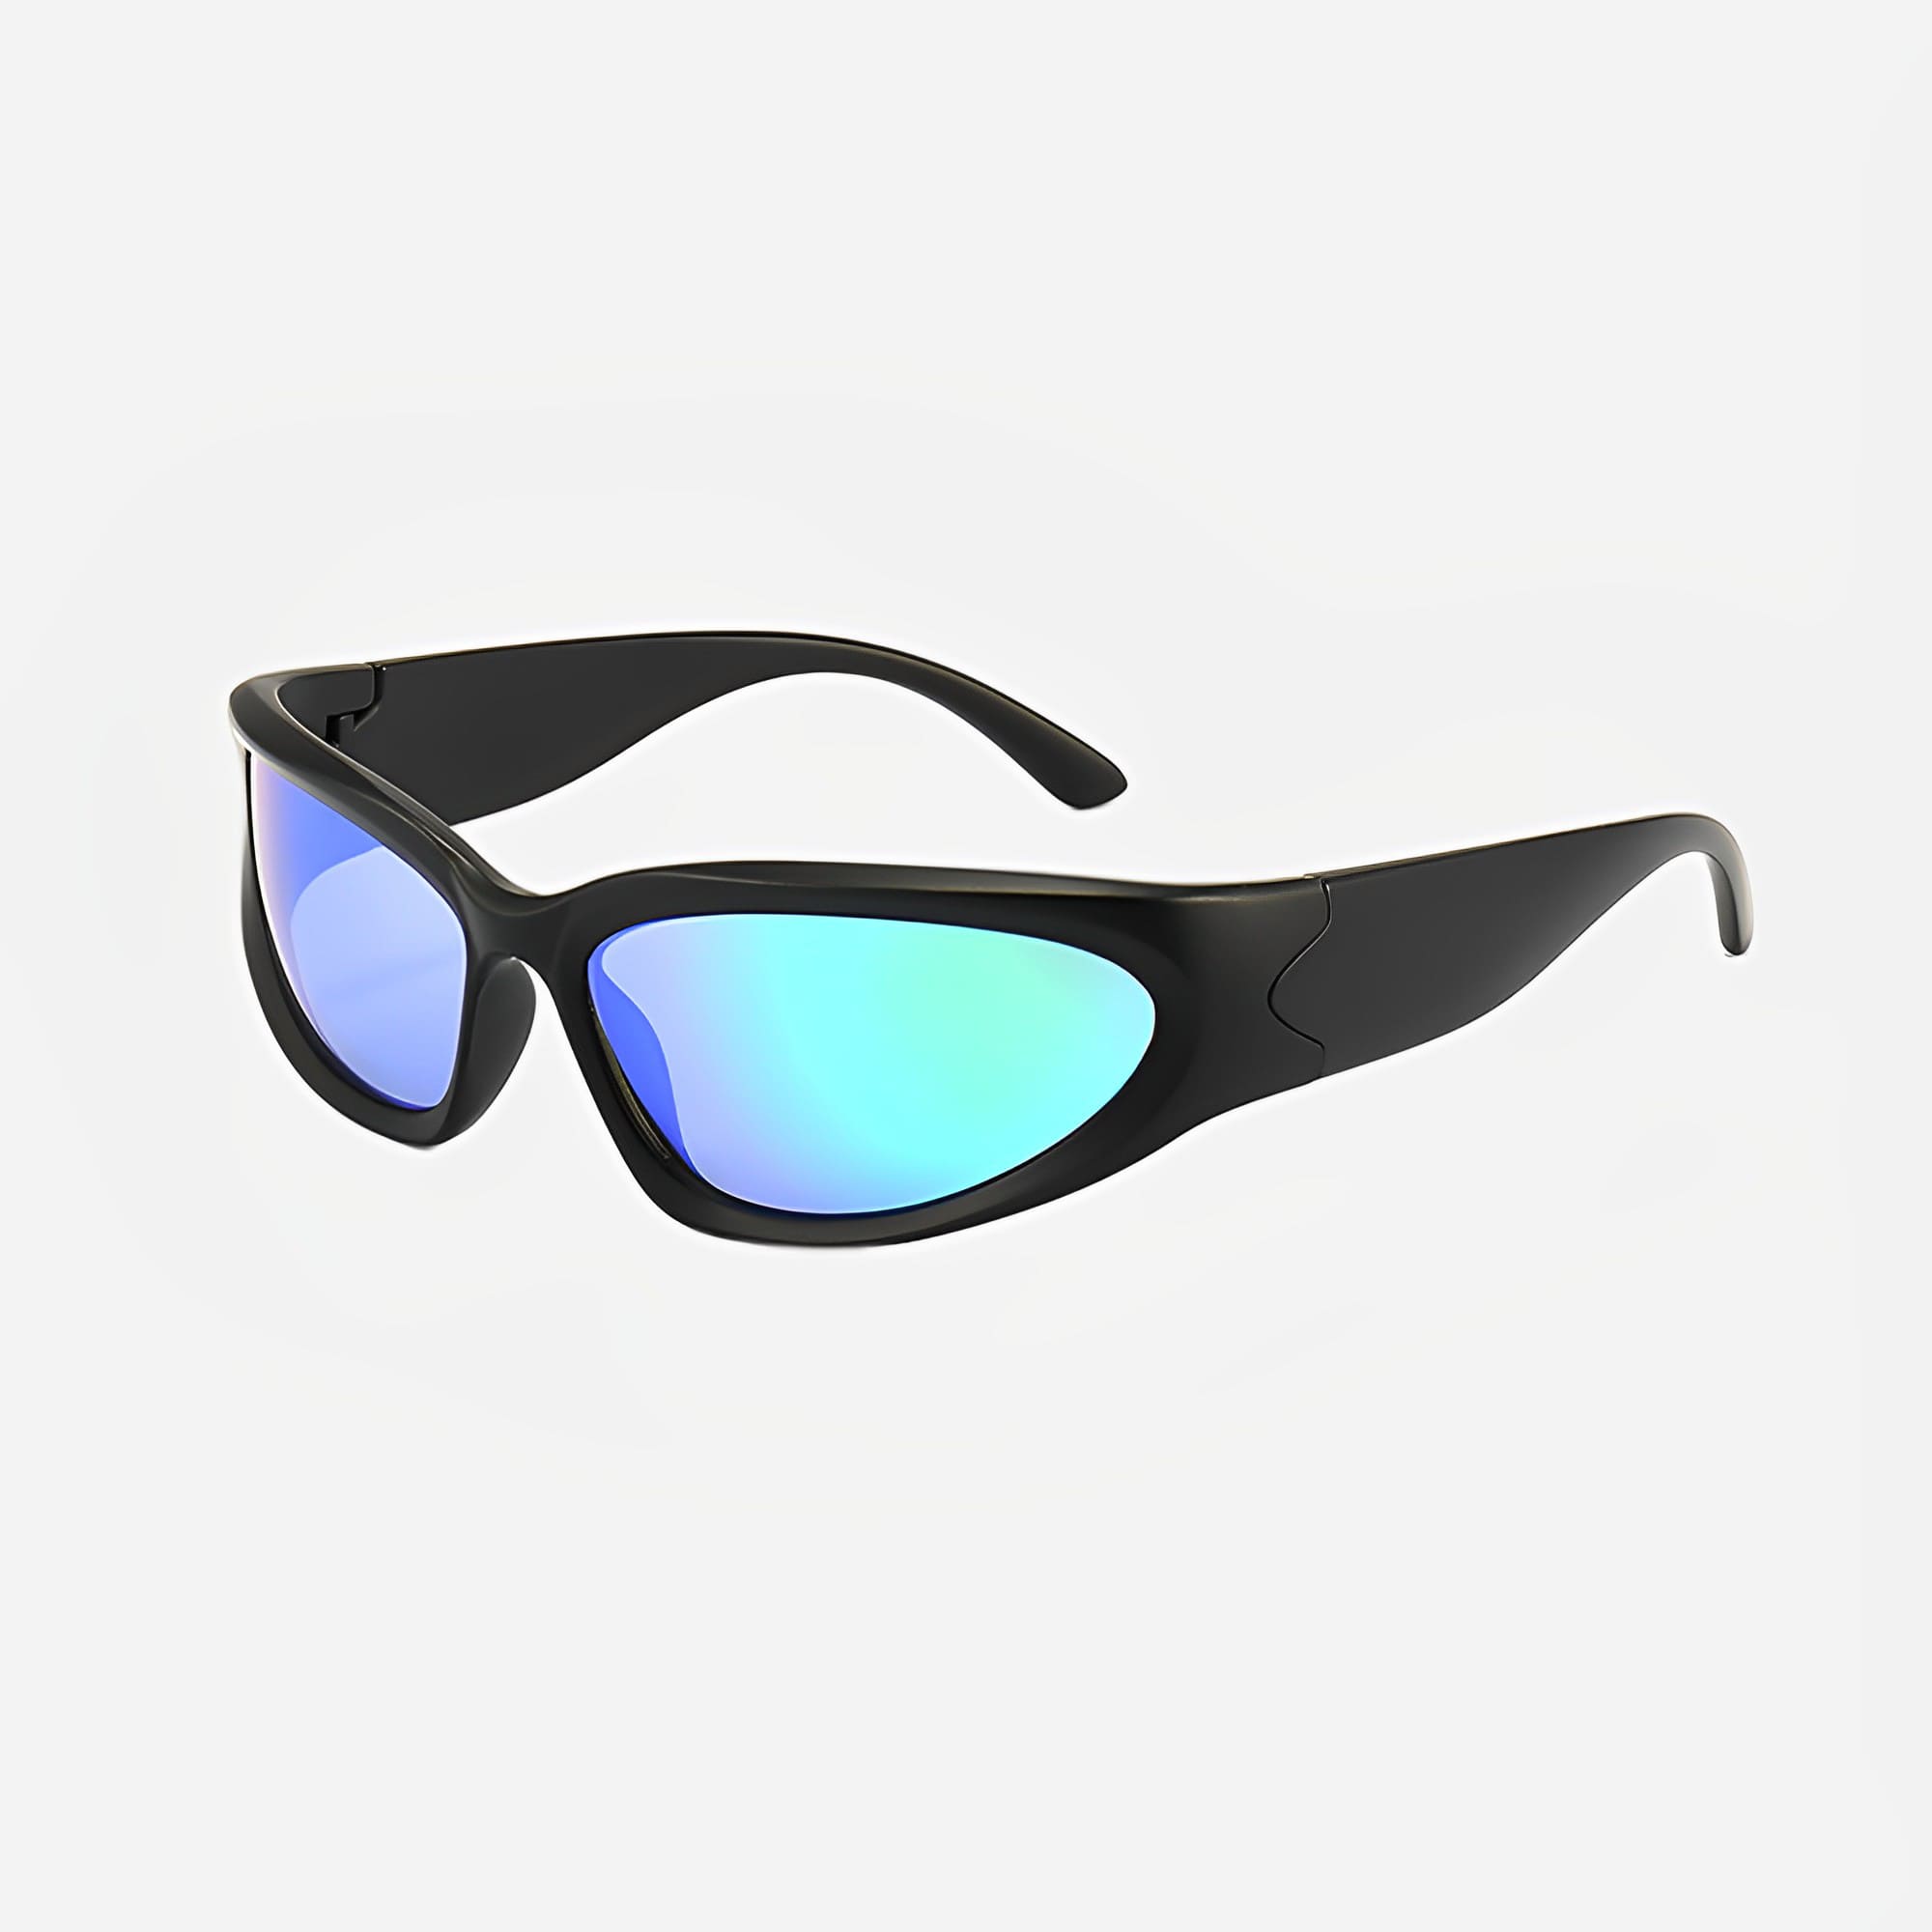 LensKart - Buy Power Sunglasses, Prescription Sunglasses at Discount Price